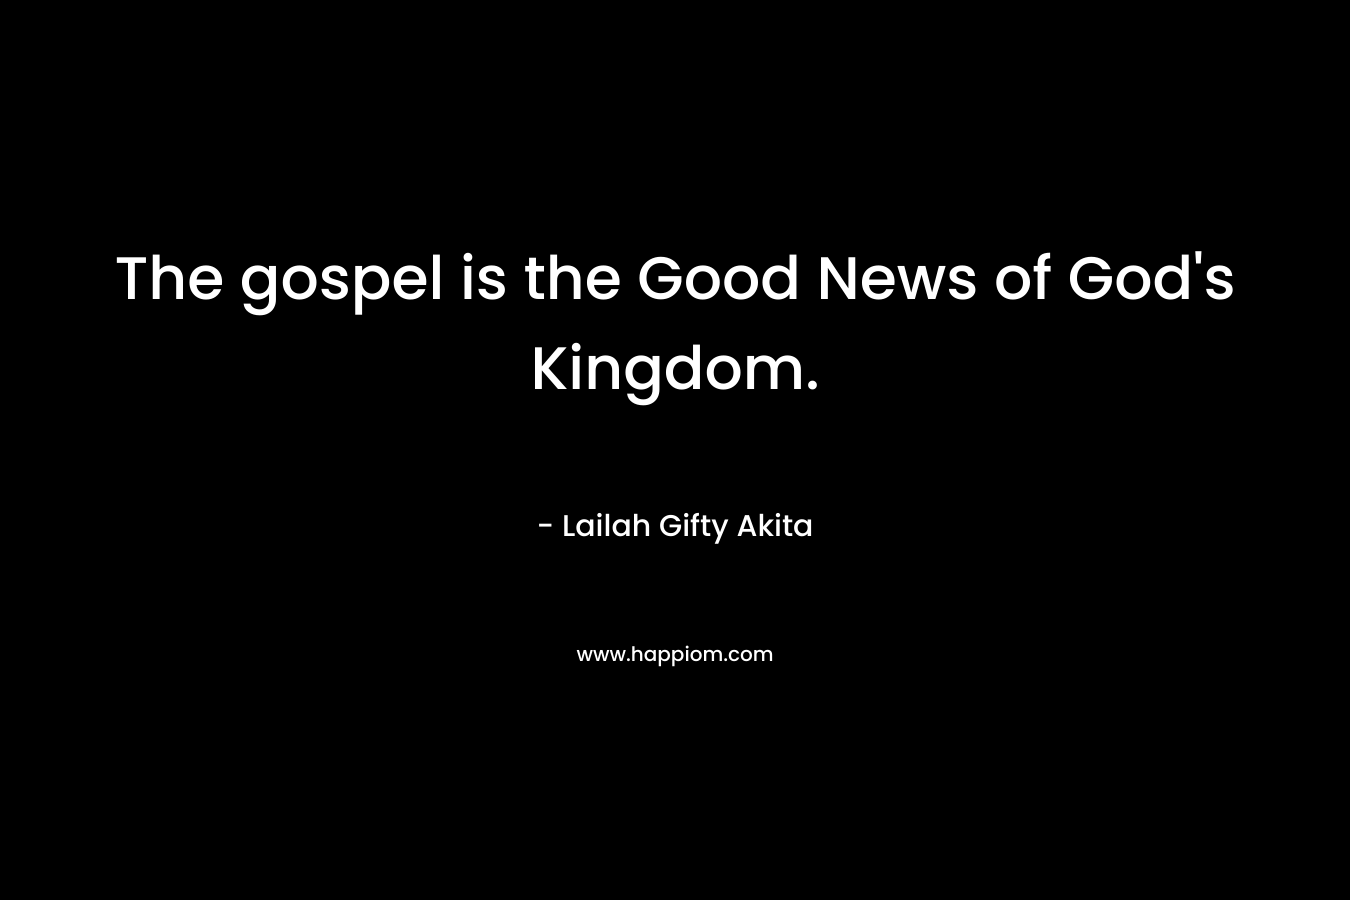 The gospel is the Good News of God's Kingdom.